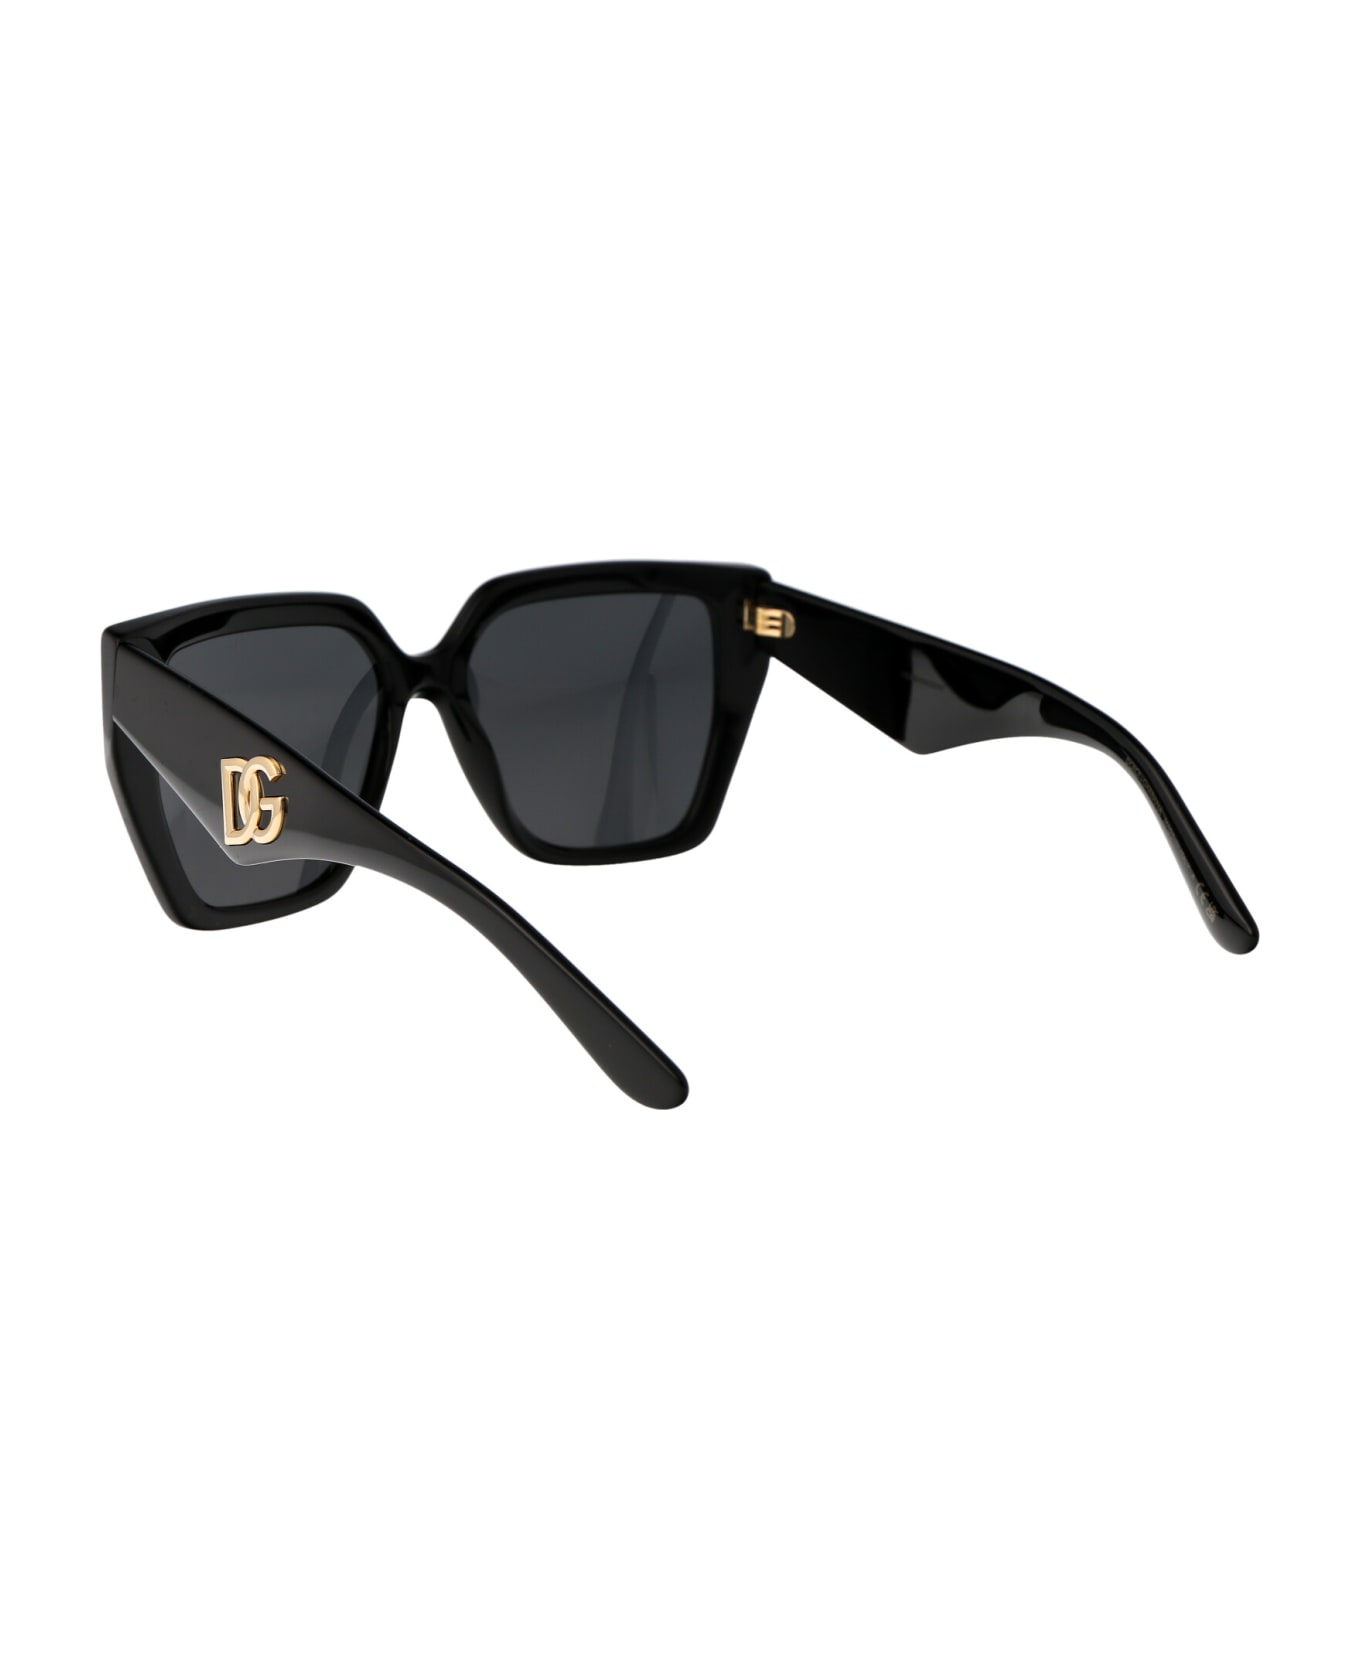 Dolce & Gabbana Eyewear 0dg4438 Sunglasses - 501/87 BLACK サングラス